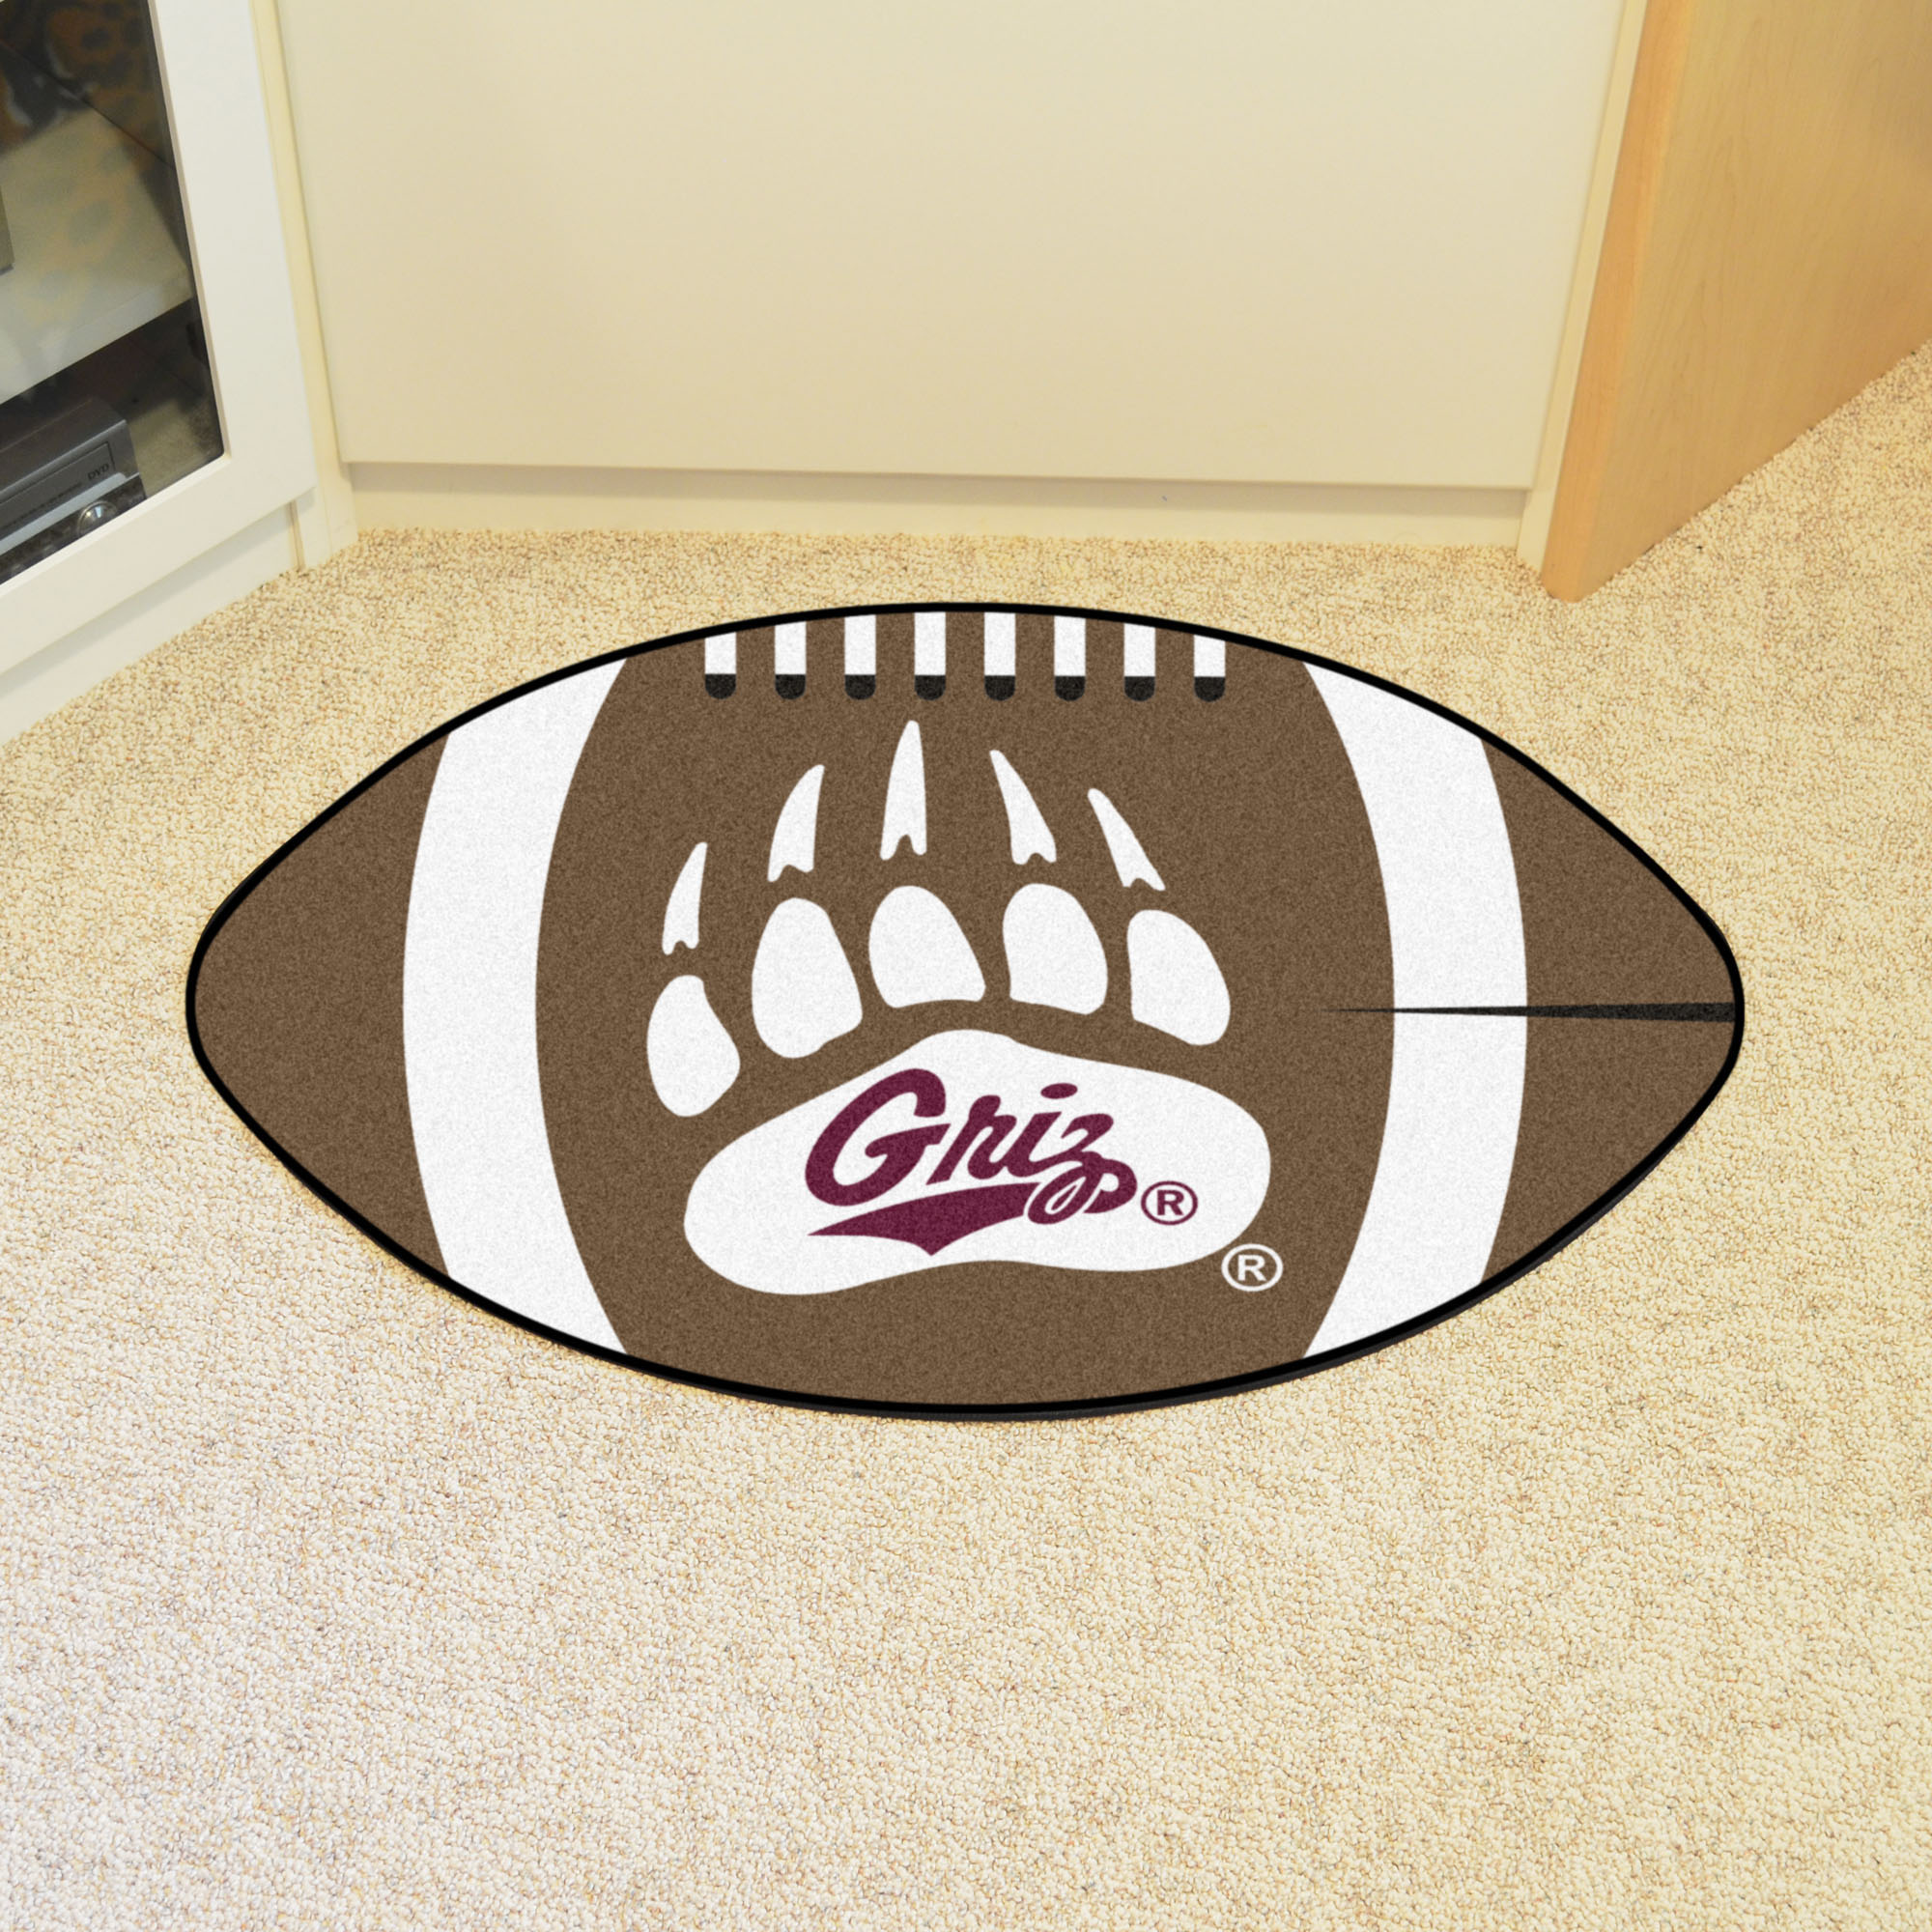 University of Montana Ball Shaped Area rugs (Ball Shaped Area Rugs: Football)